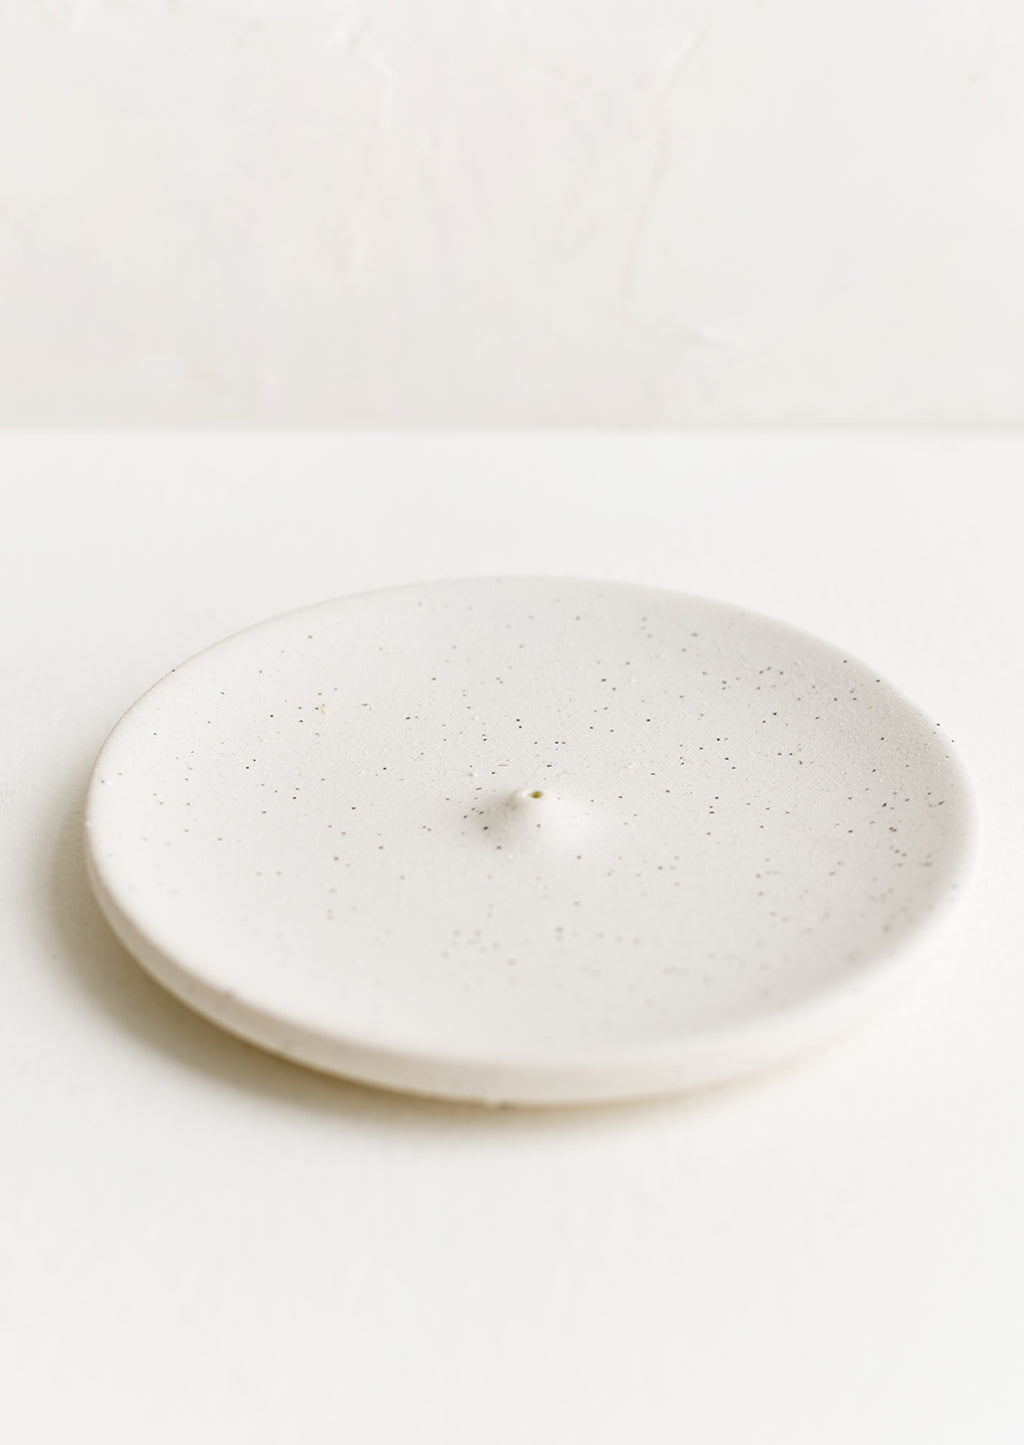 Speckled White: A round ceramic incense holder in matte speckled white.